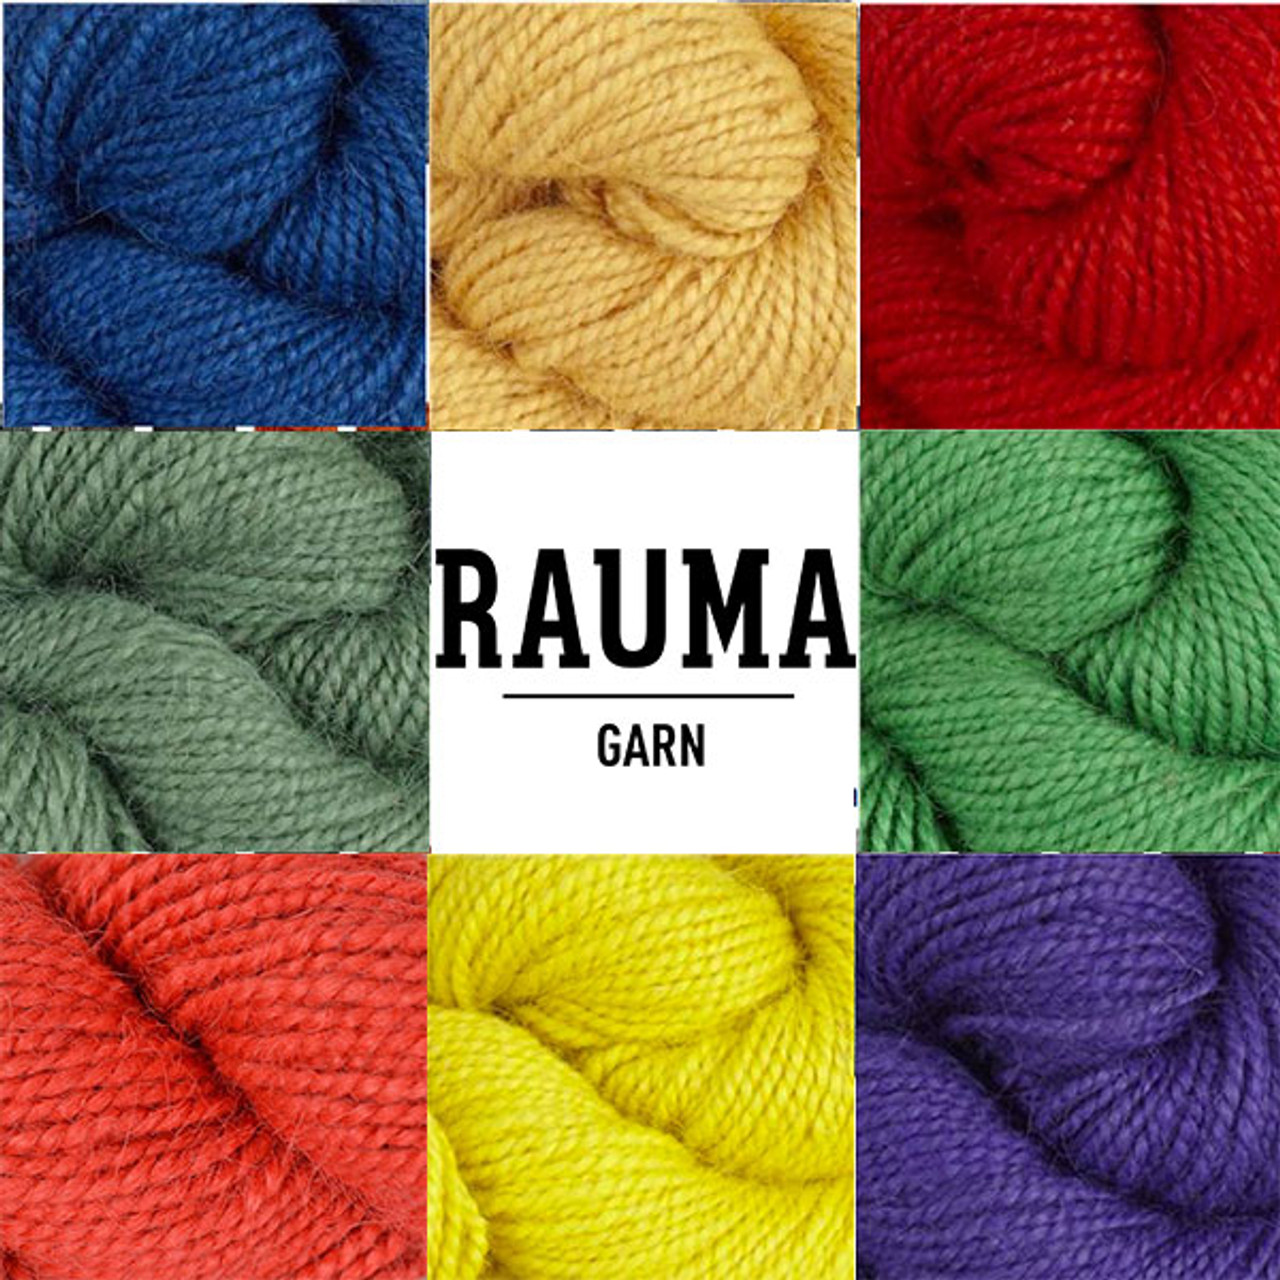 Rauma Ryegarn - Norwegian Rug Yarn